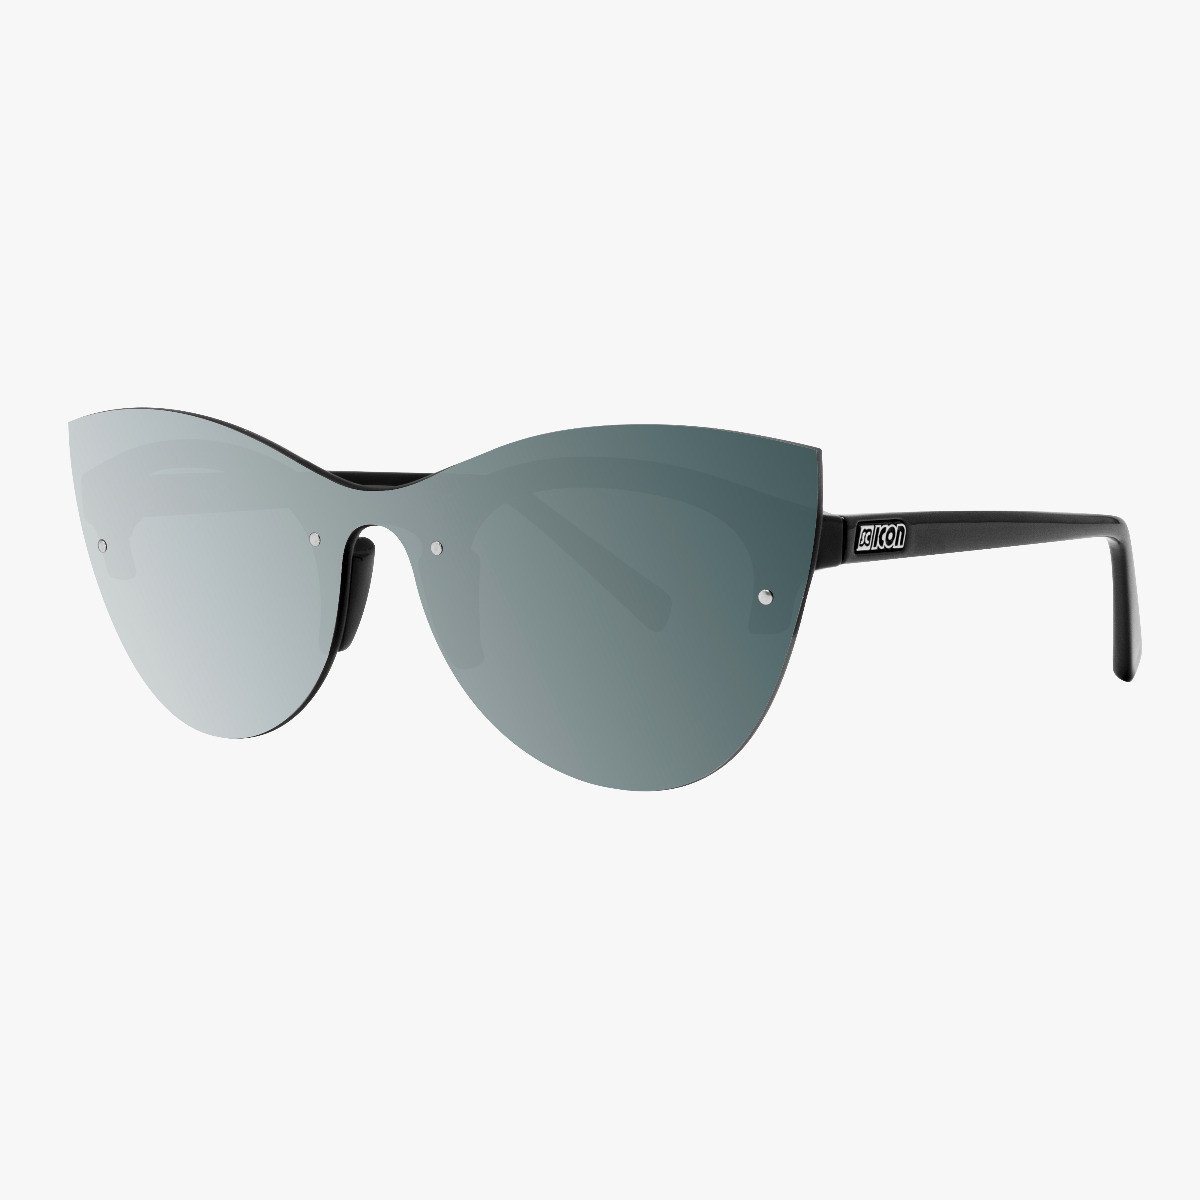 Scicon Sports | Phantom Lifestyle Women's Sunglasses - Black Frame, Silver Lens - EY180802